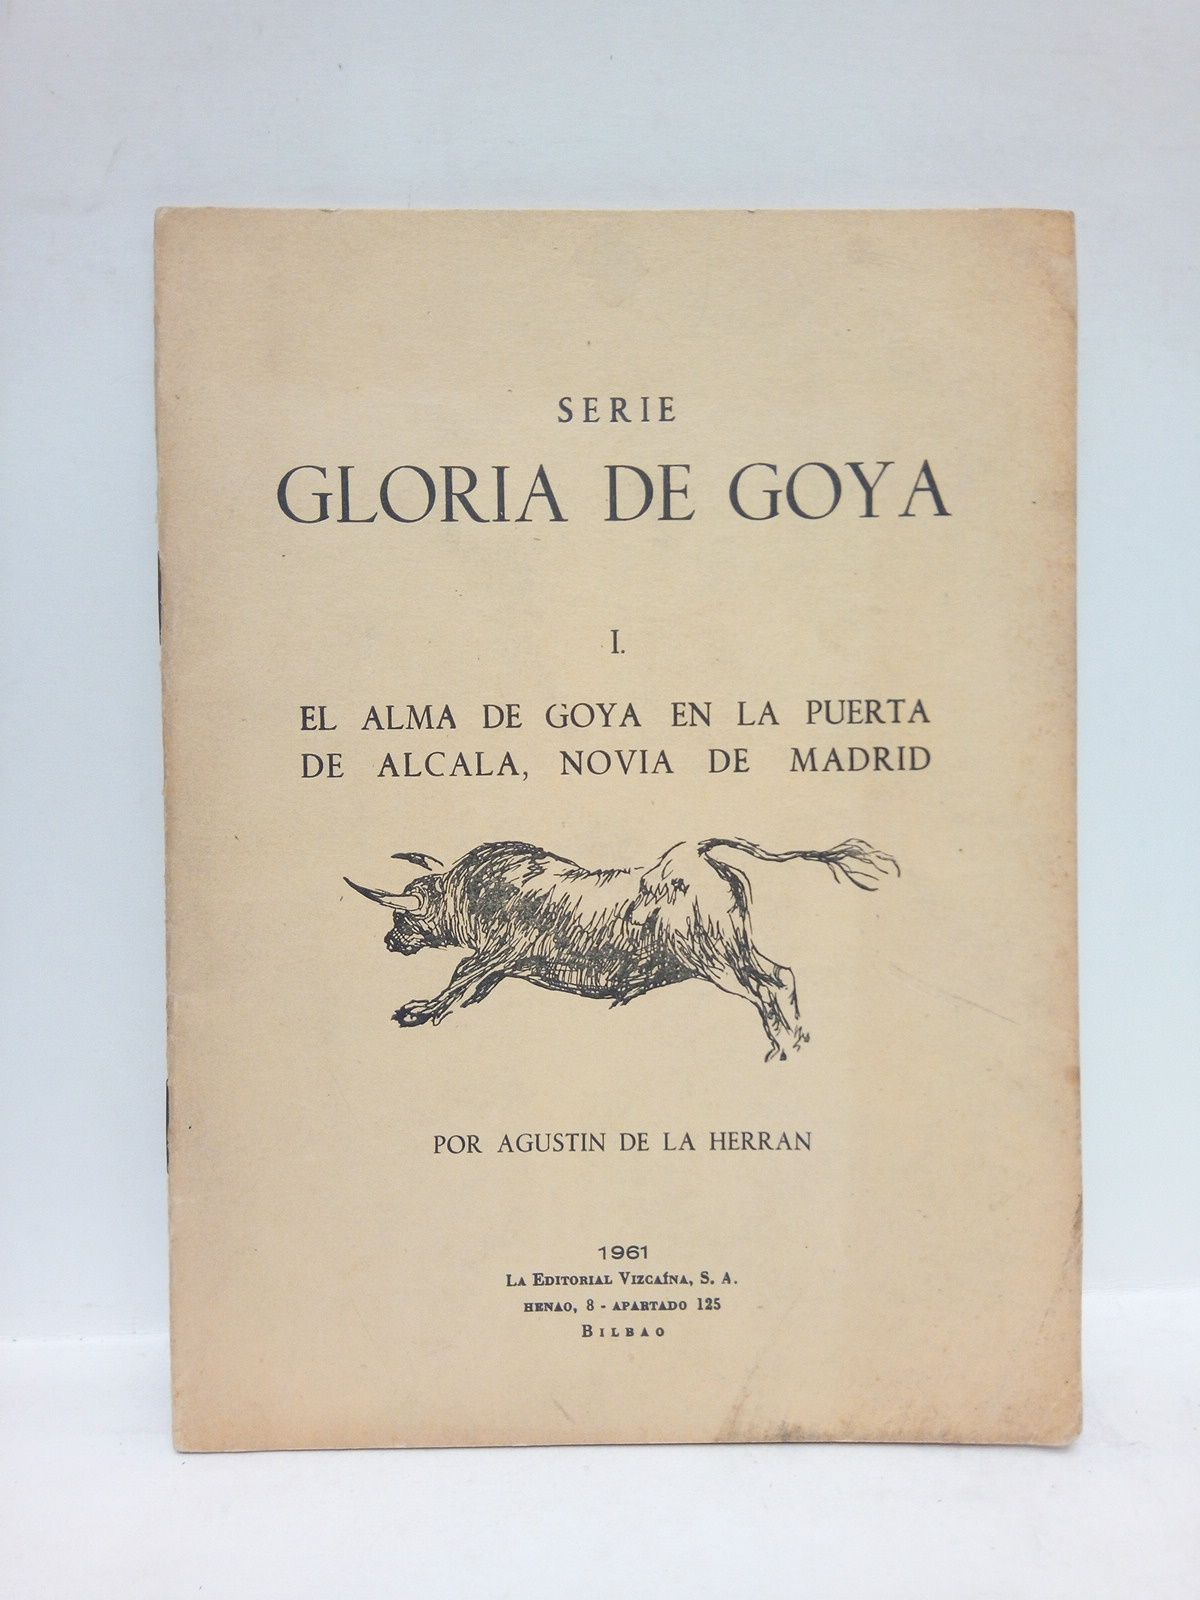 HERRAN, Agustn de la - El alma de Goya en la Puerta de Alcal, novia de Madrid